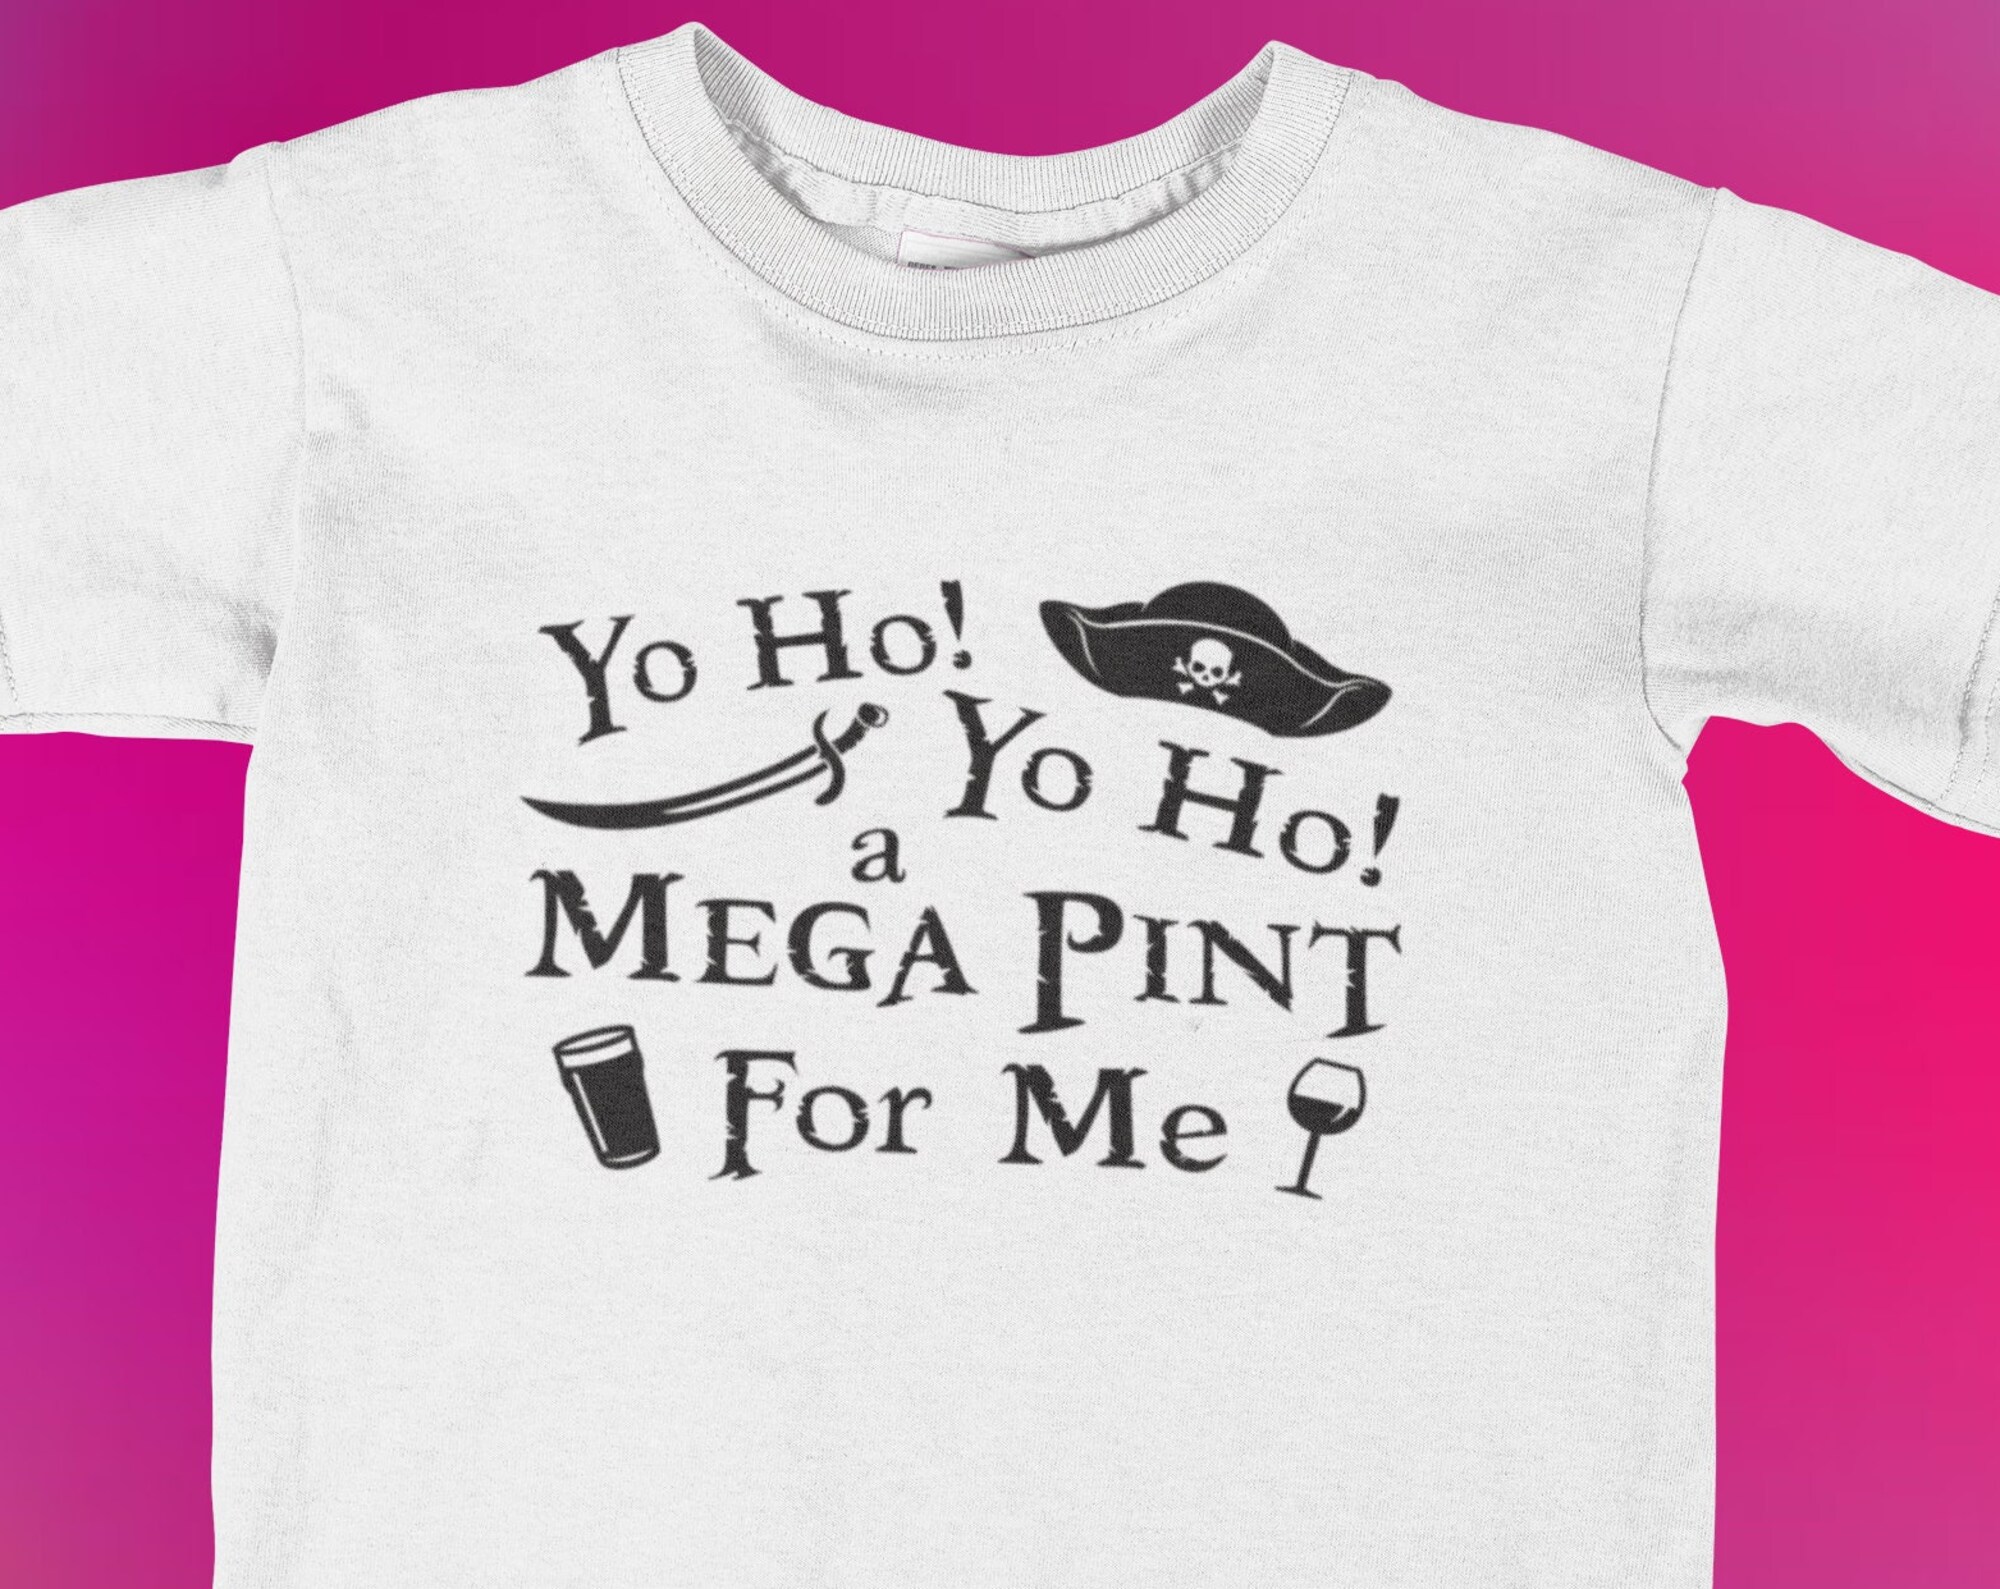 Mega Pint For Me! Mega Pint Shirt, Johnny Depp Tee, Hearsay Brewing, Unisex Adult Clothing, Pirates Life Shirt, Graphic Tees